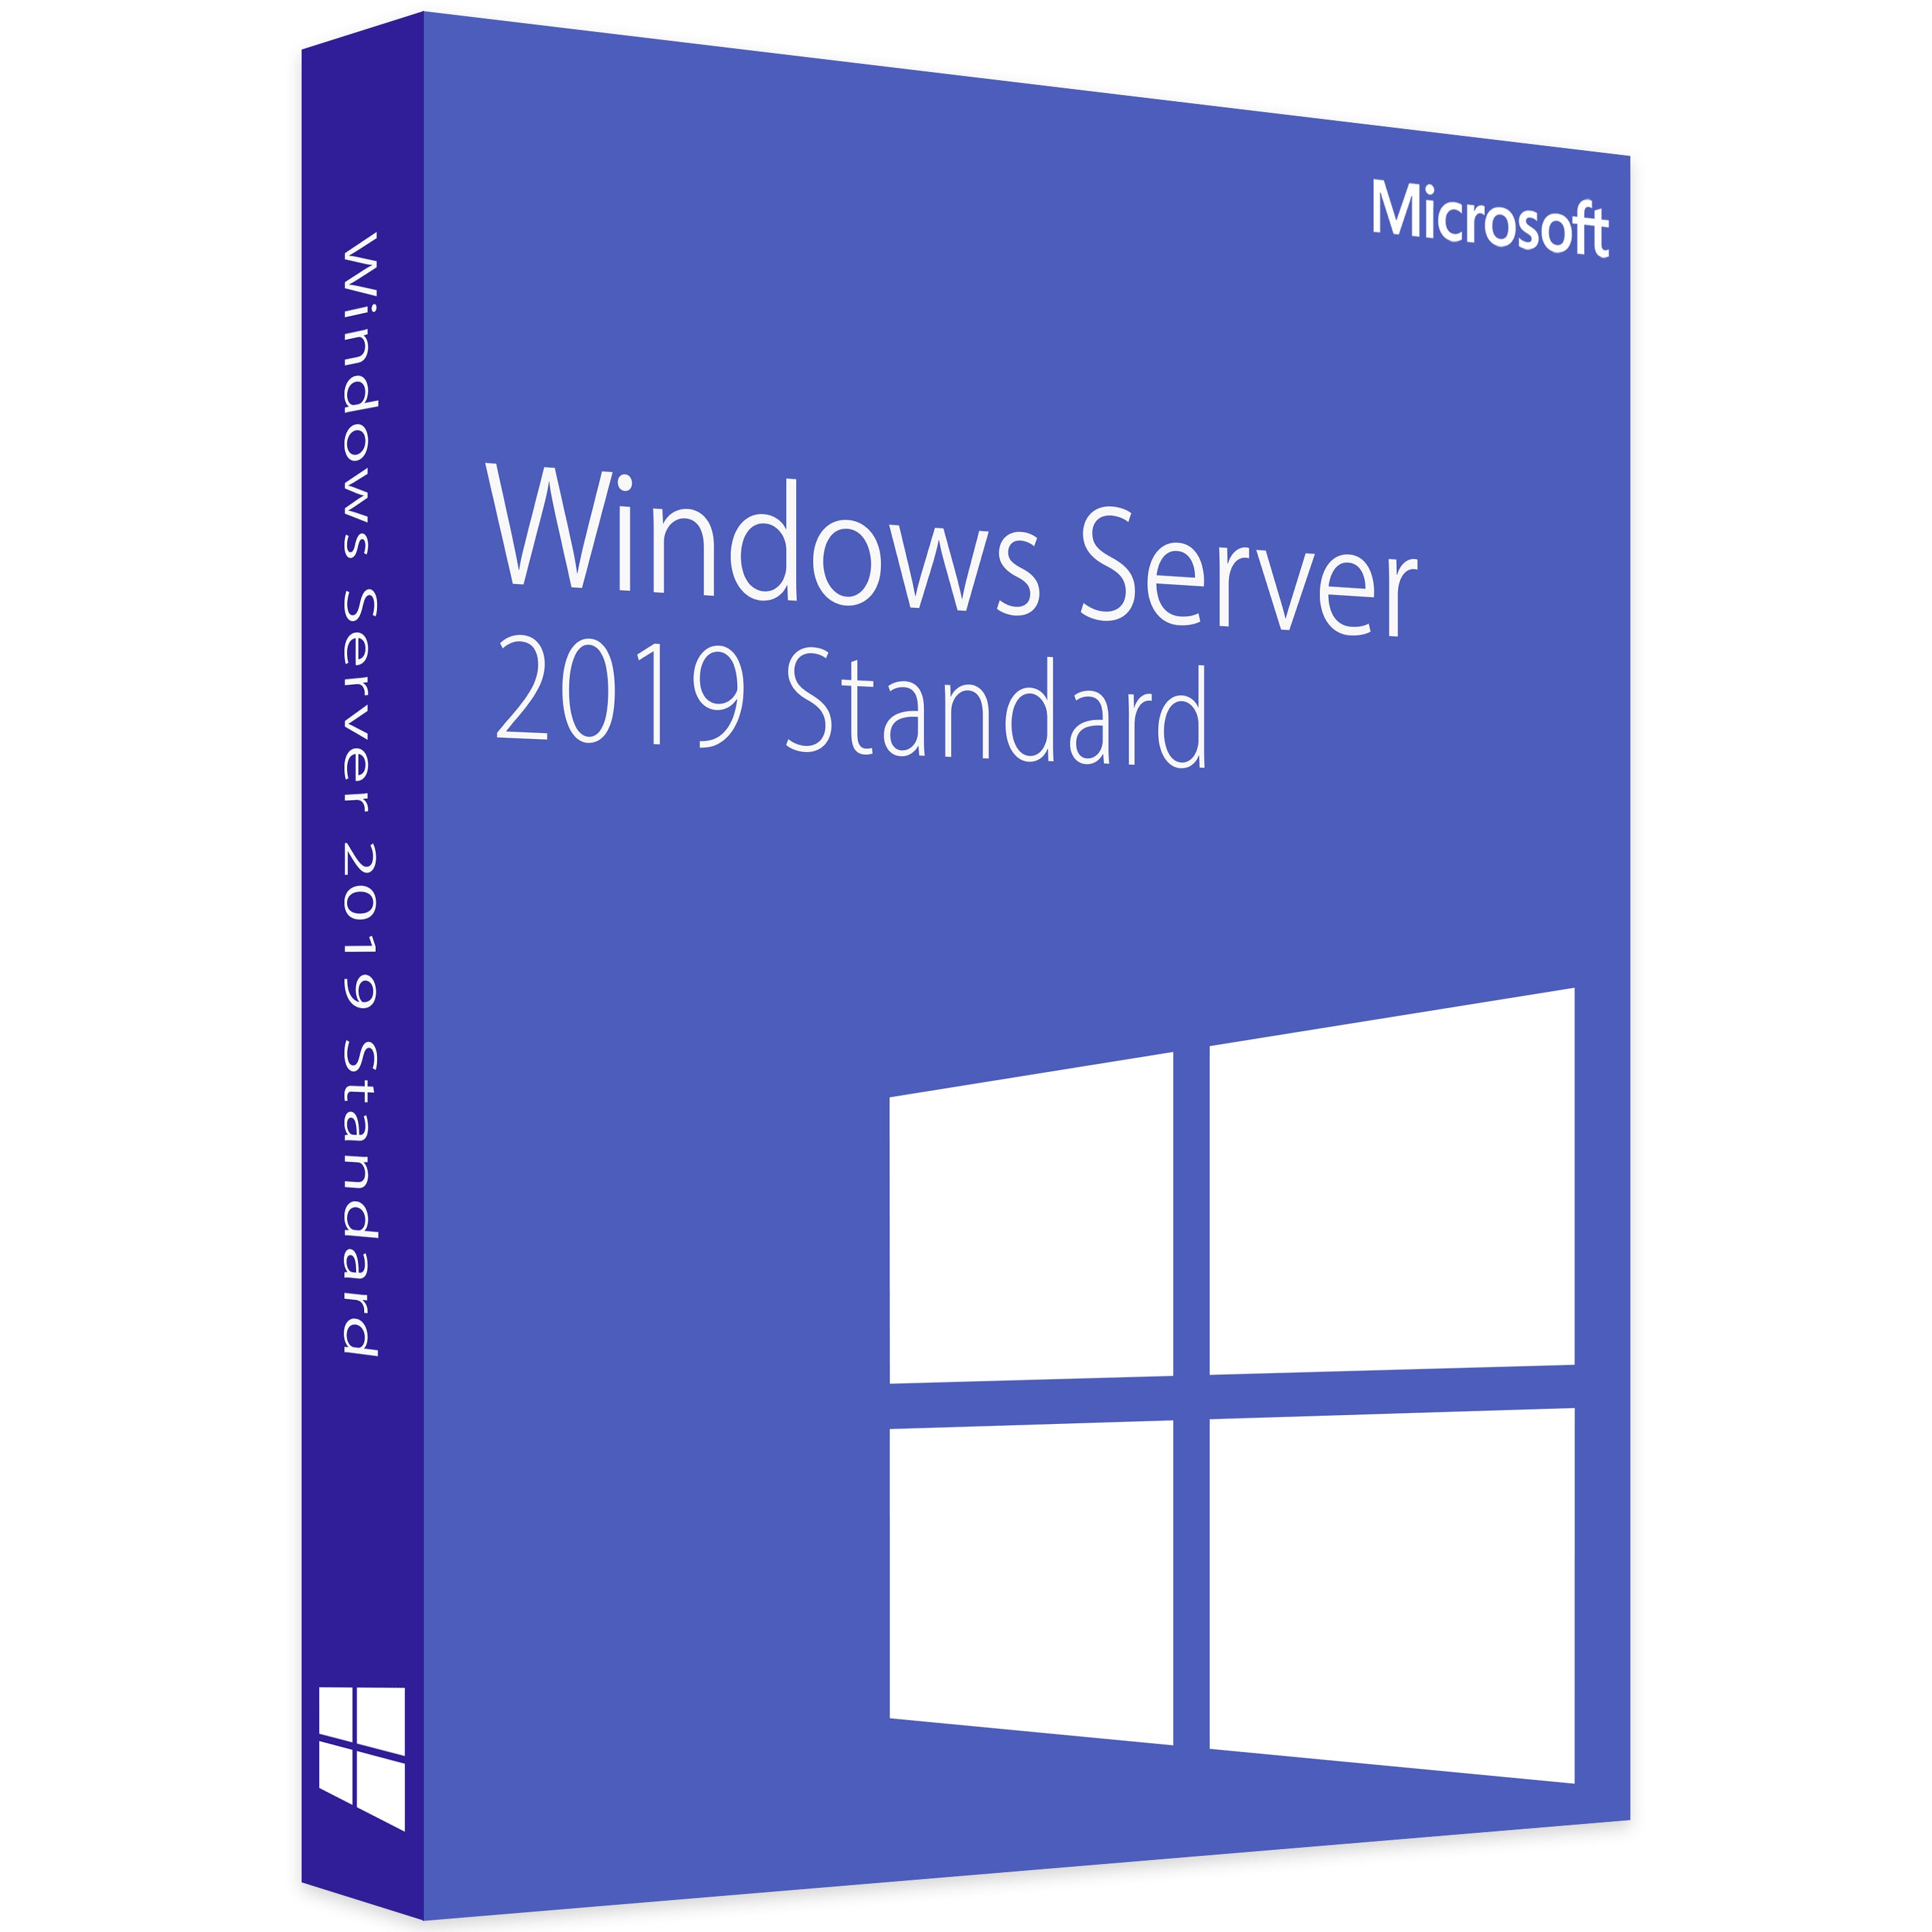 Microsoft Windows Server 2019 Standard - Lifetime license 1PC